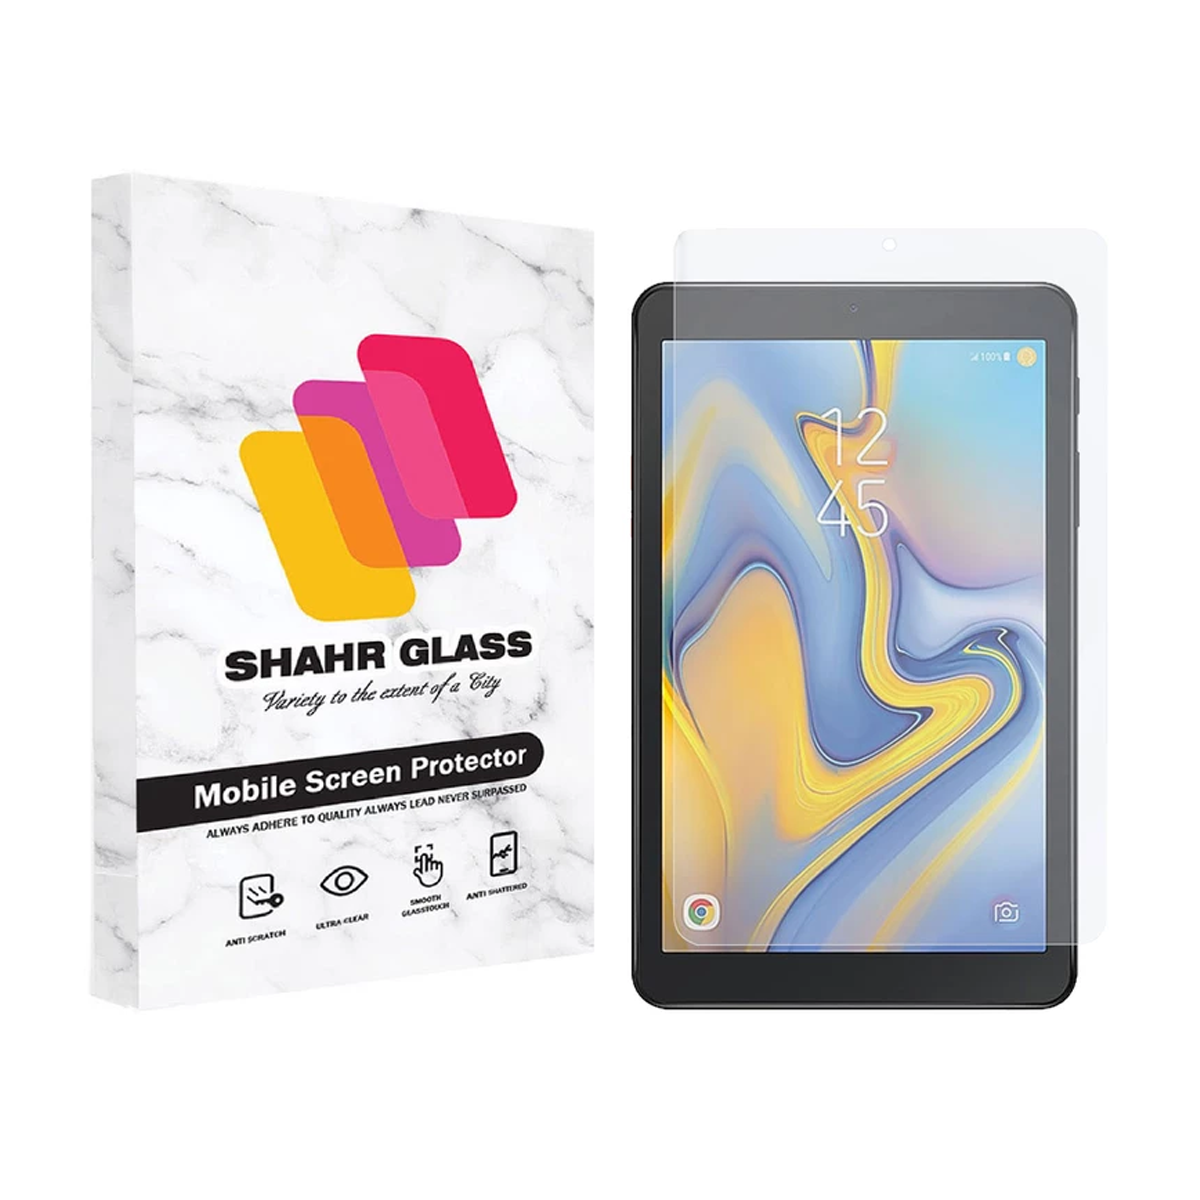 گلس تبلت سامسونگ Galaxy Tab A 8.0 2018 شهر گلس مدل SMPT1-بی رنگ شفاف